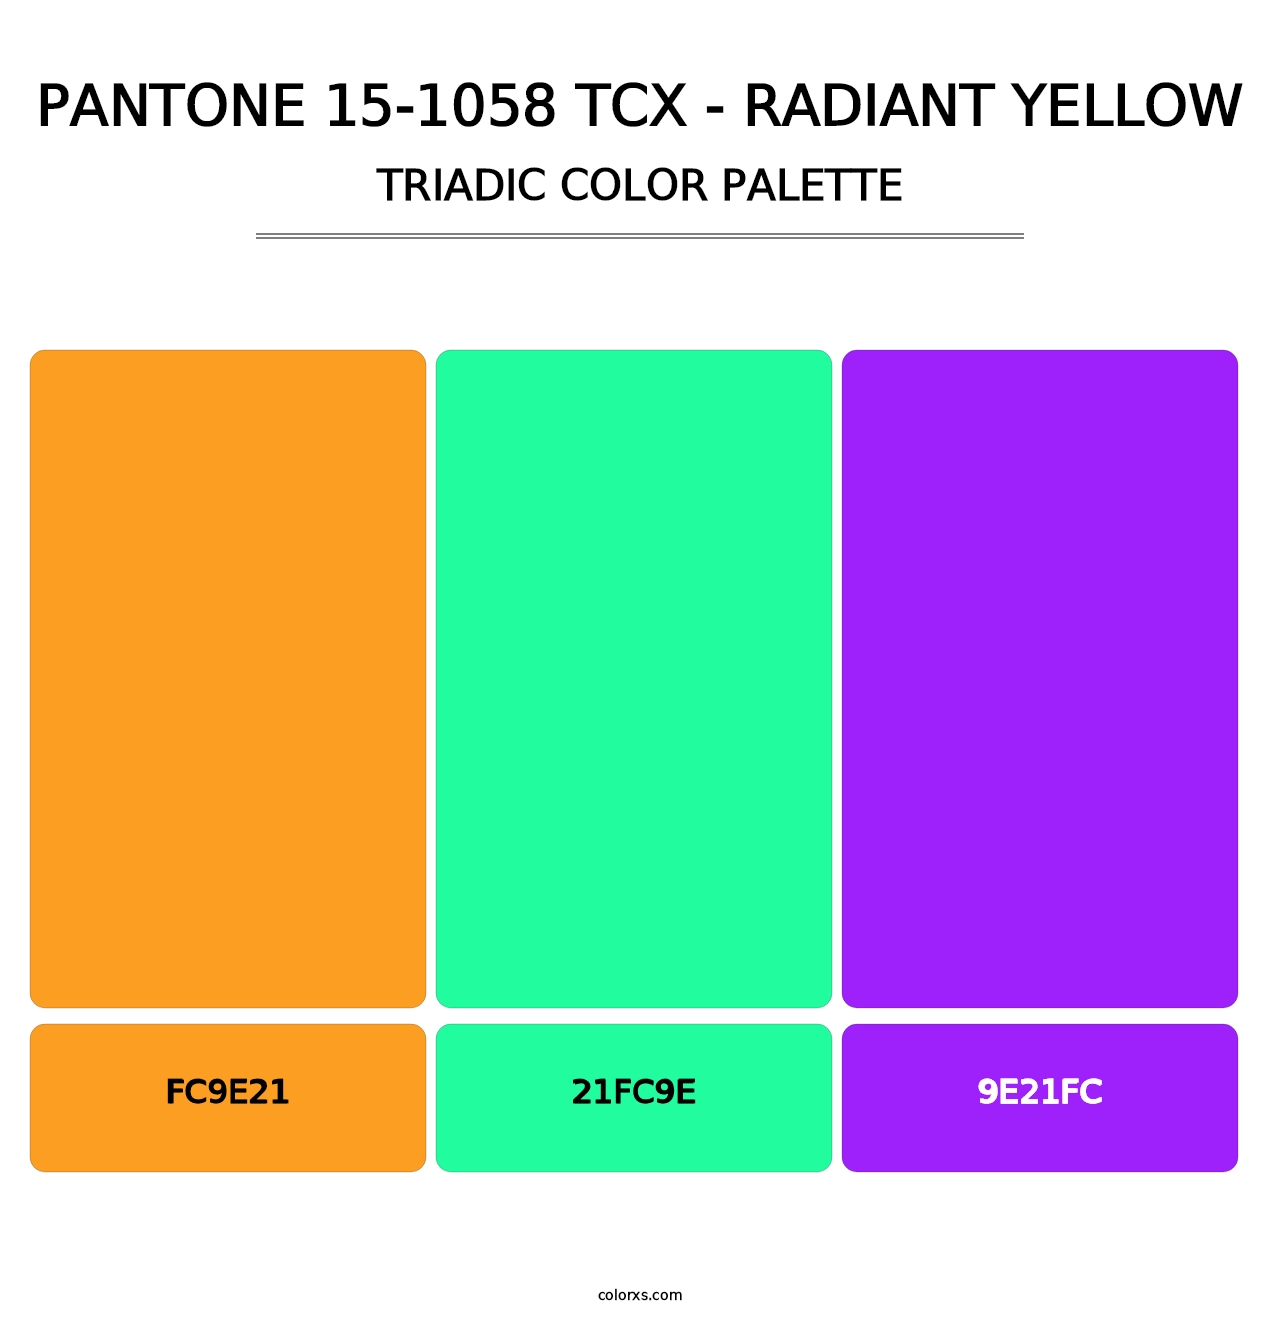 PANTONE 15-1058 TCX - Radiant Yellow - Triadic Color Palette